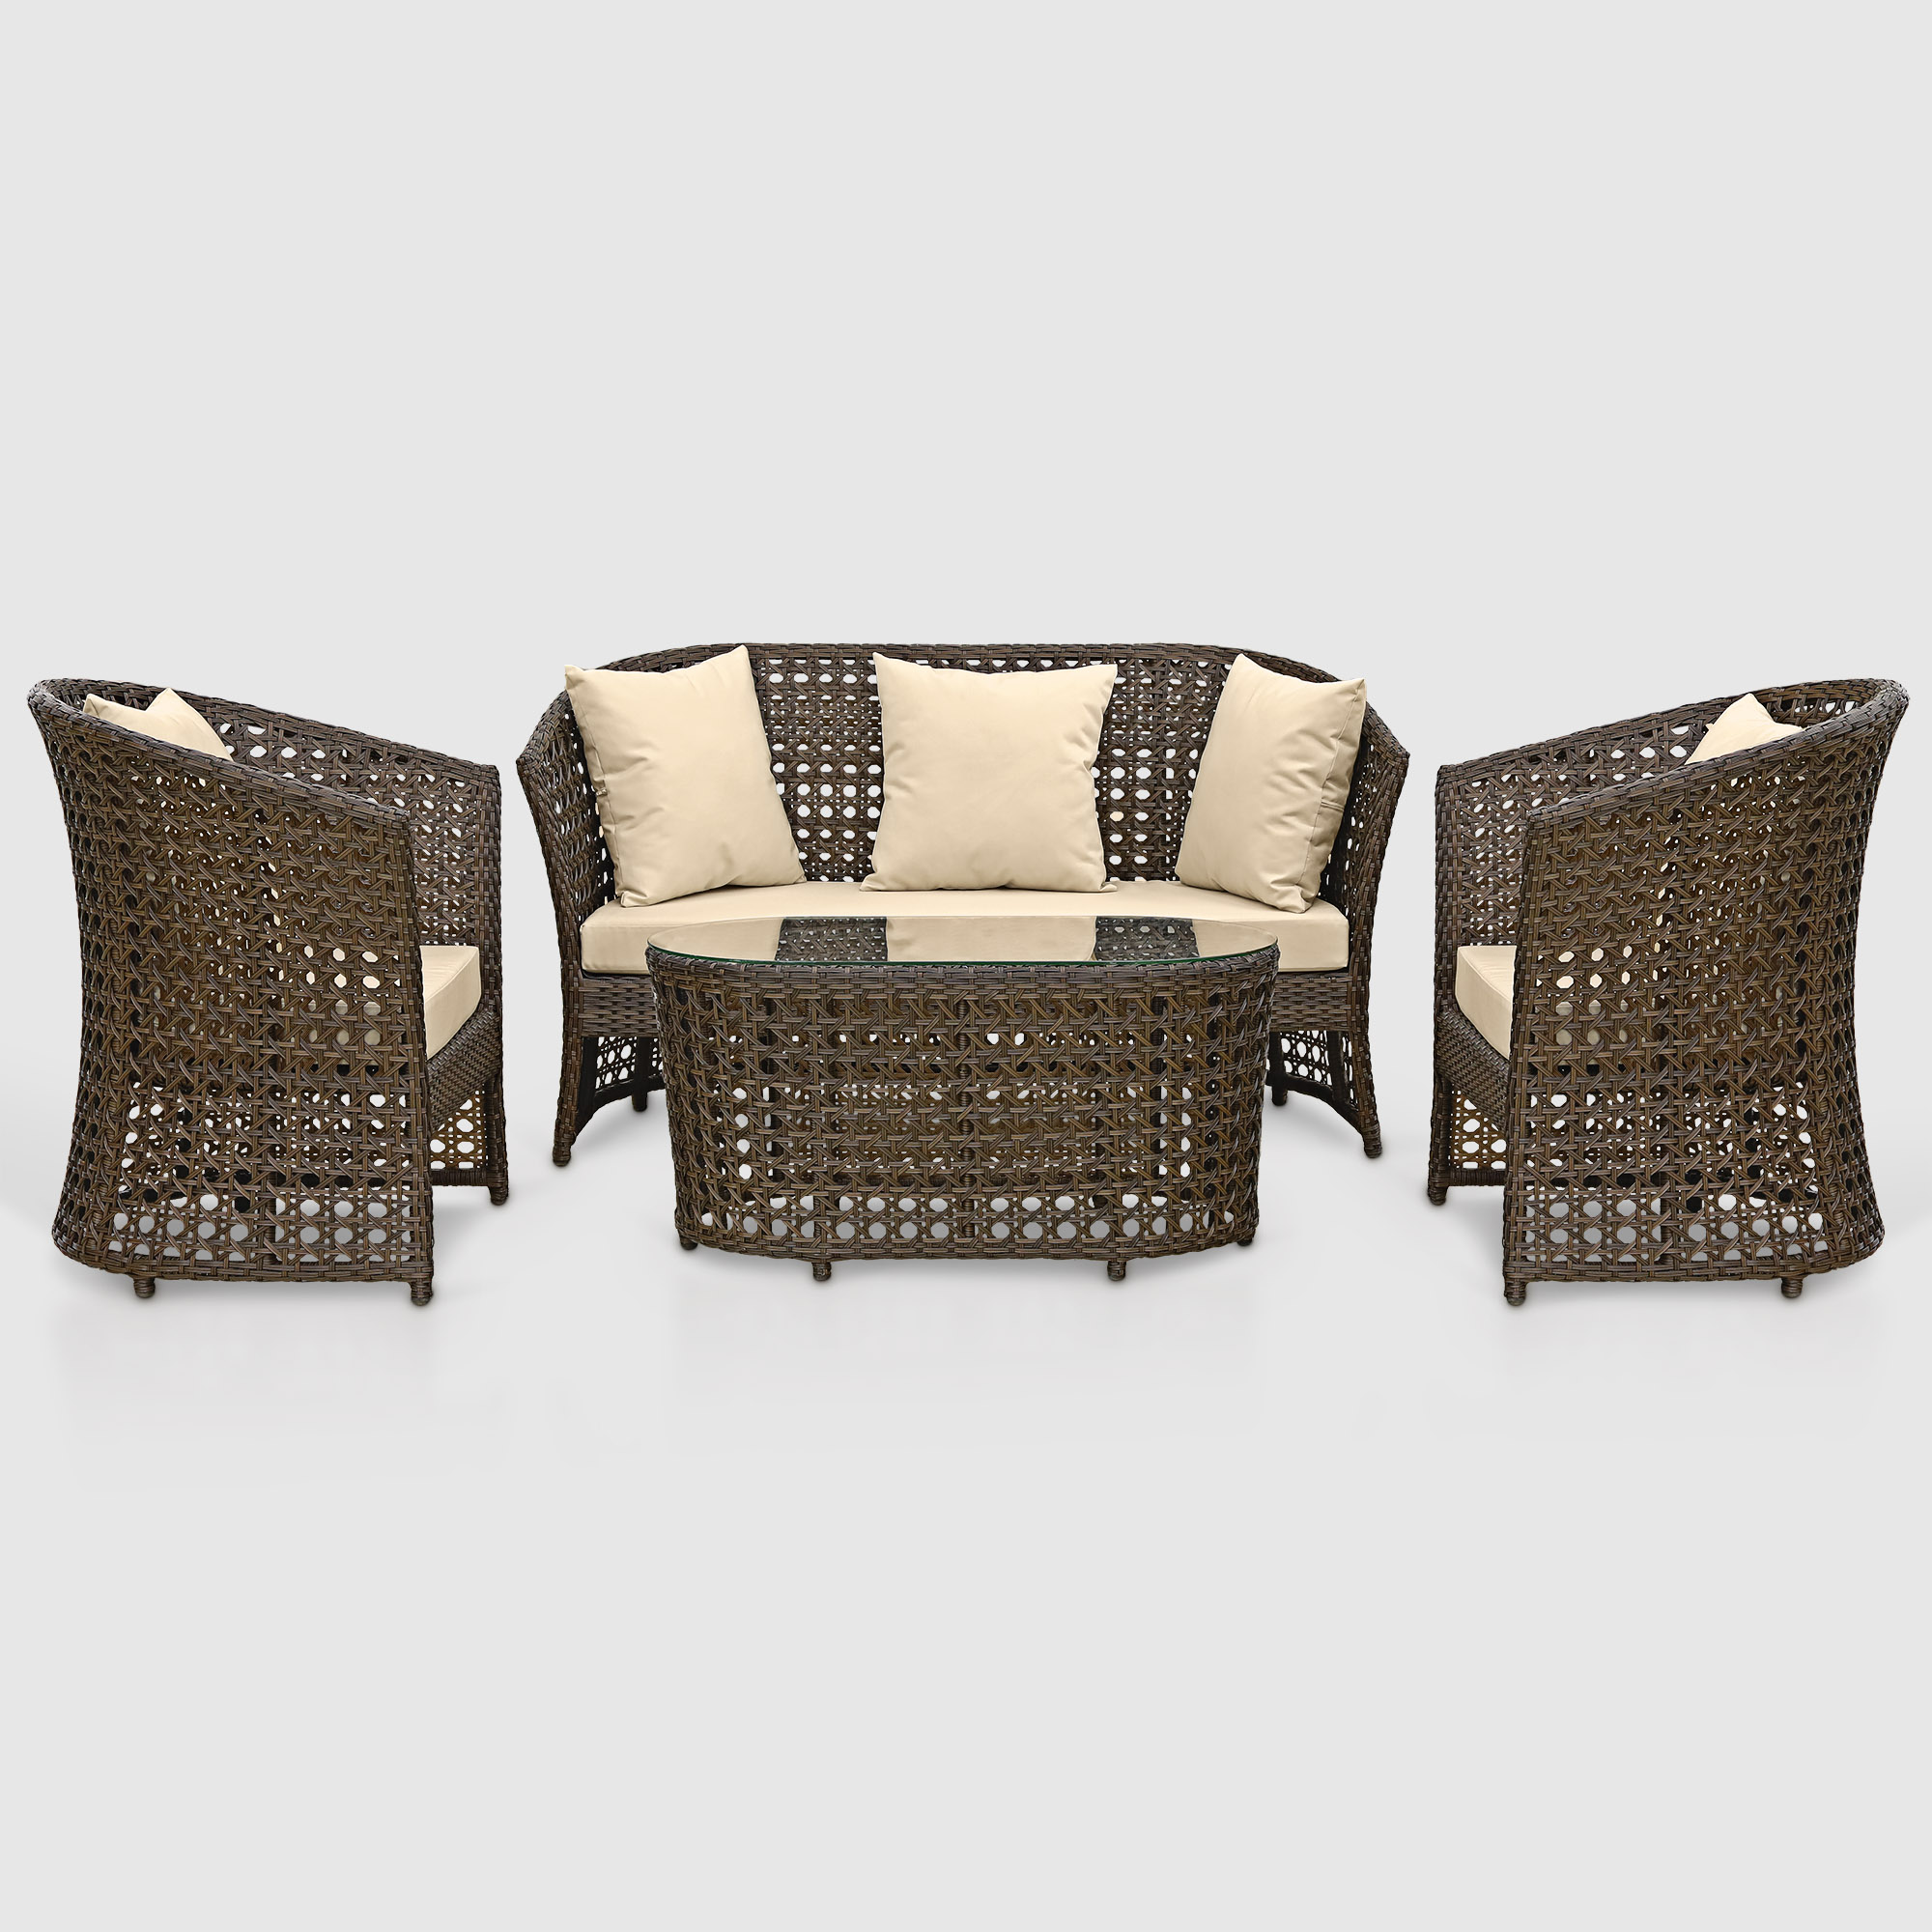 Комплект мебели Ns Rattan Linda коричневый с бежевым 4 предмета, цвет бежевый, размер 155х90х70